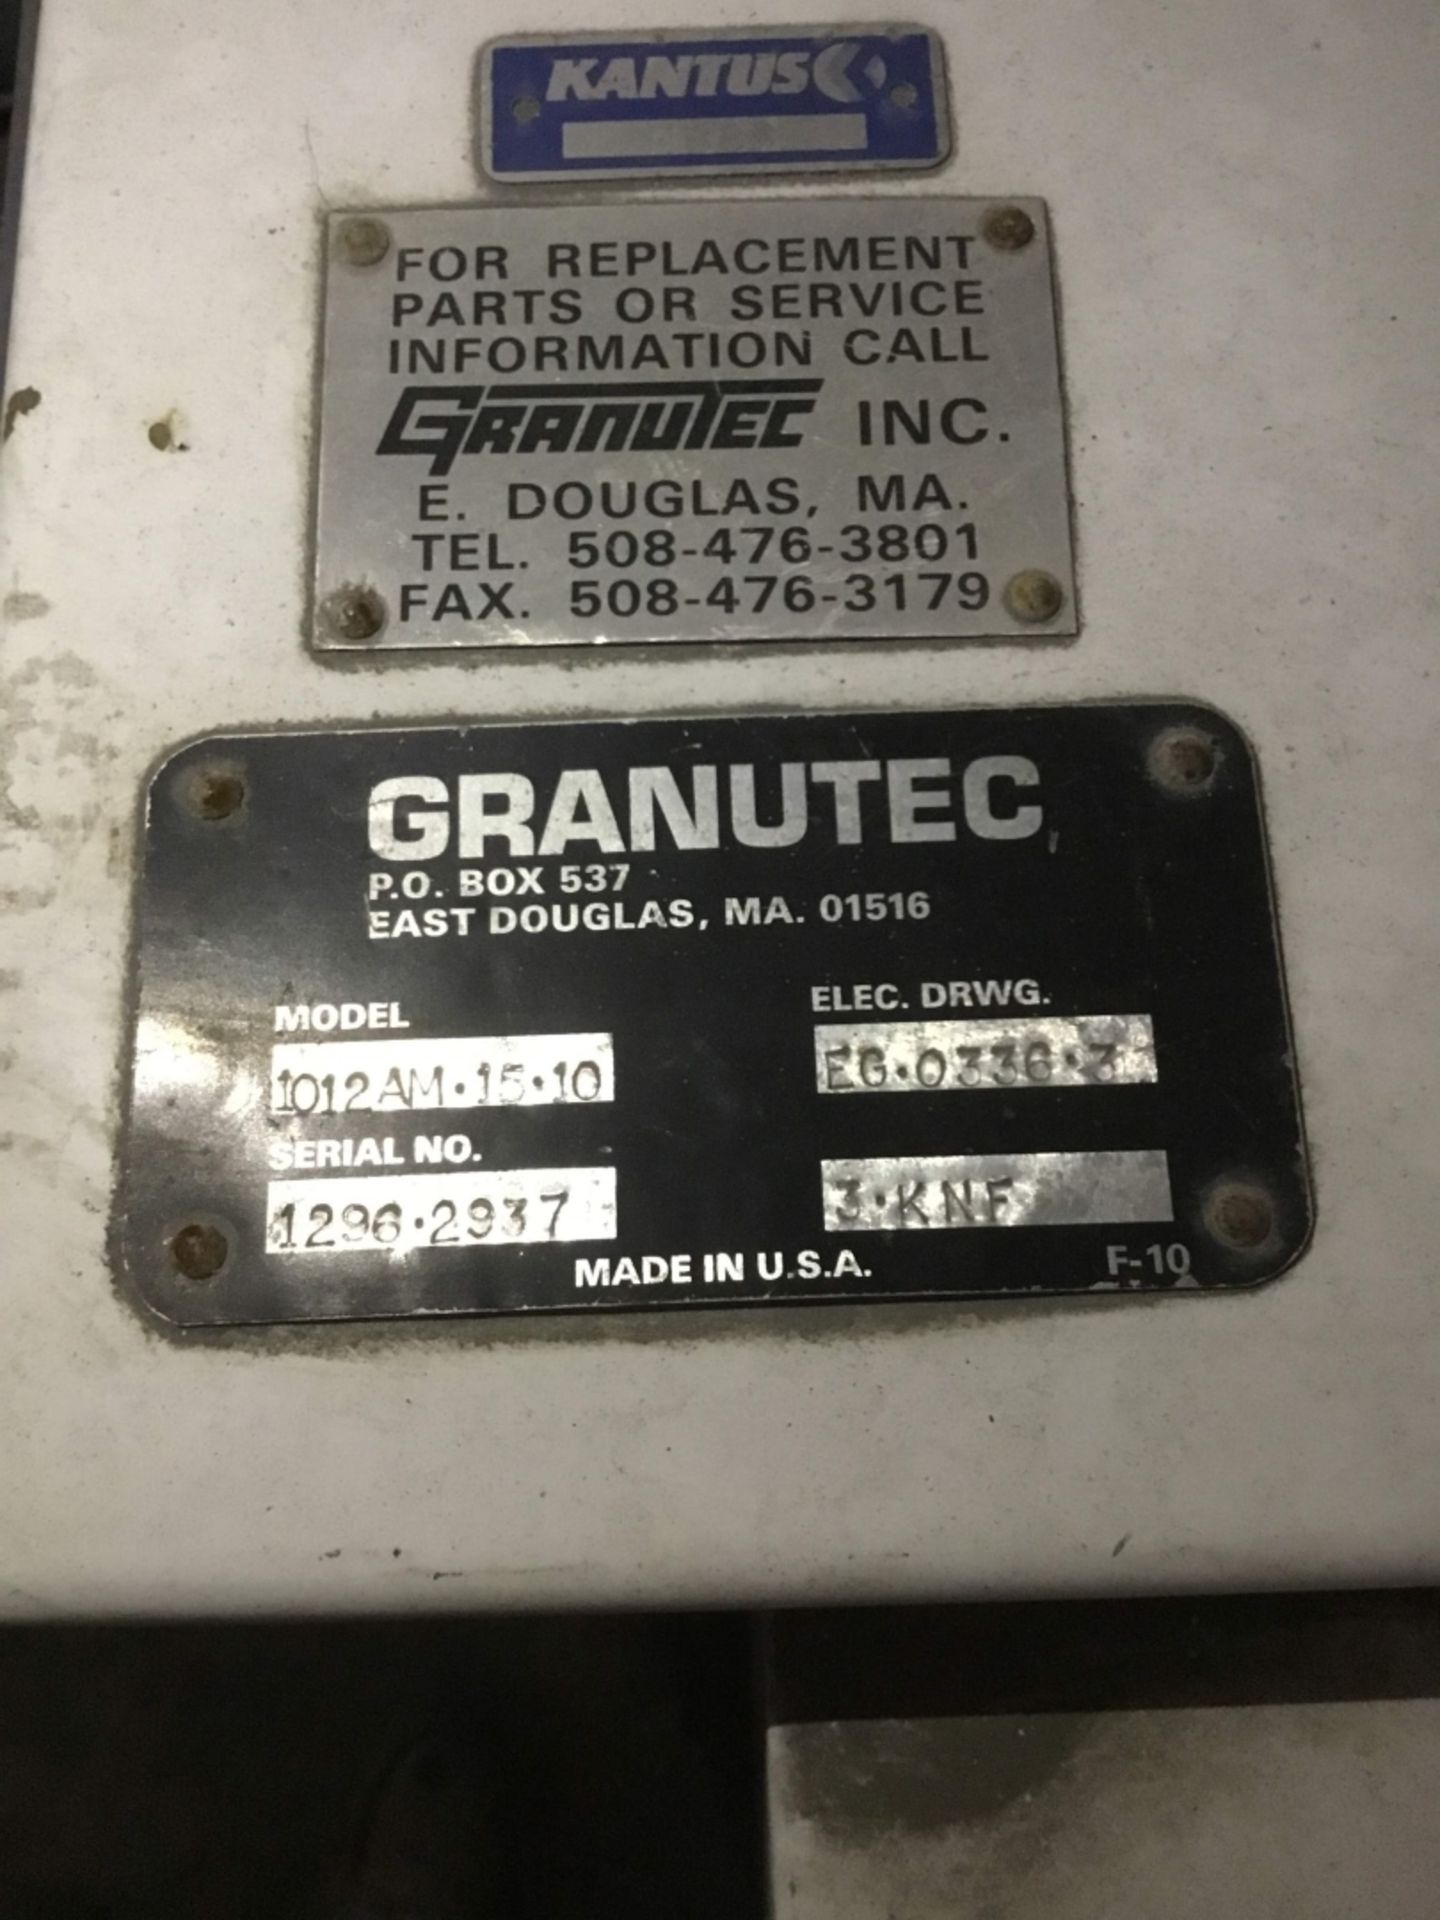 Granutec 1012AM-15-10 Granulator- - Image 5 of 7